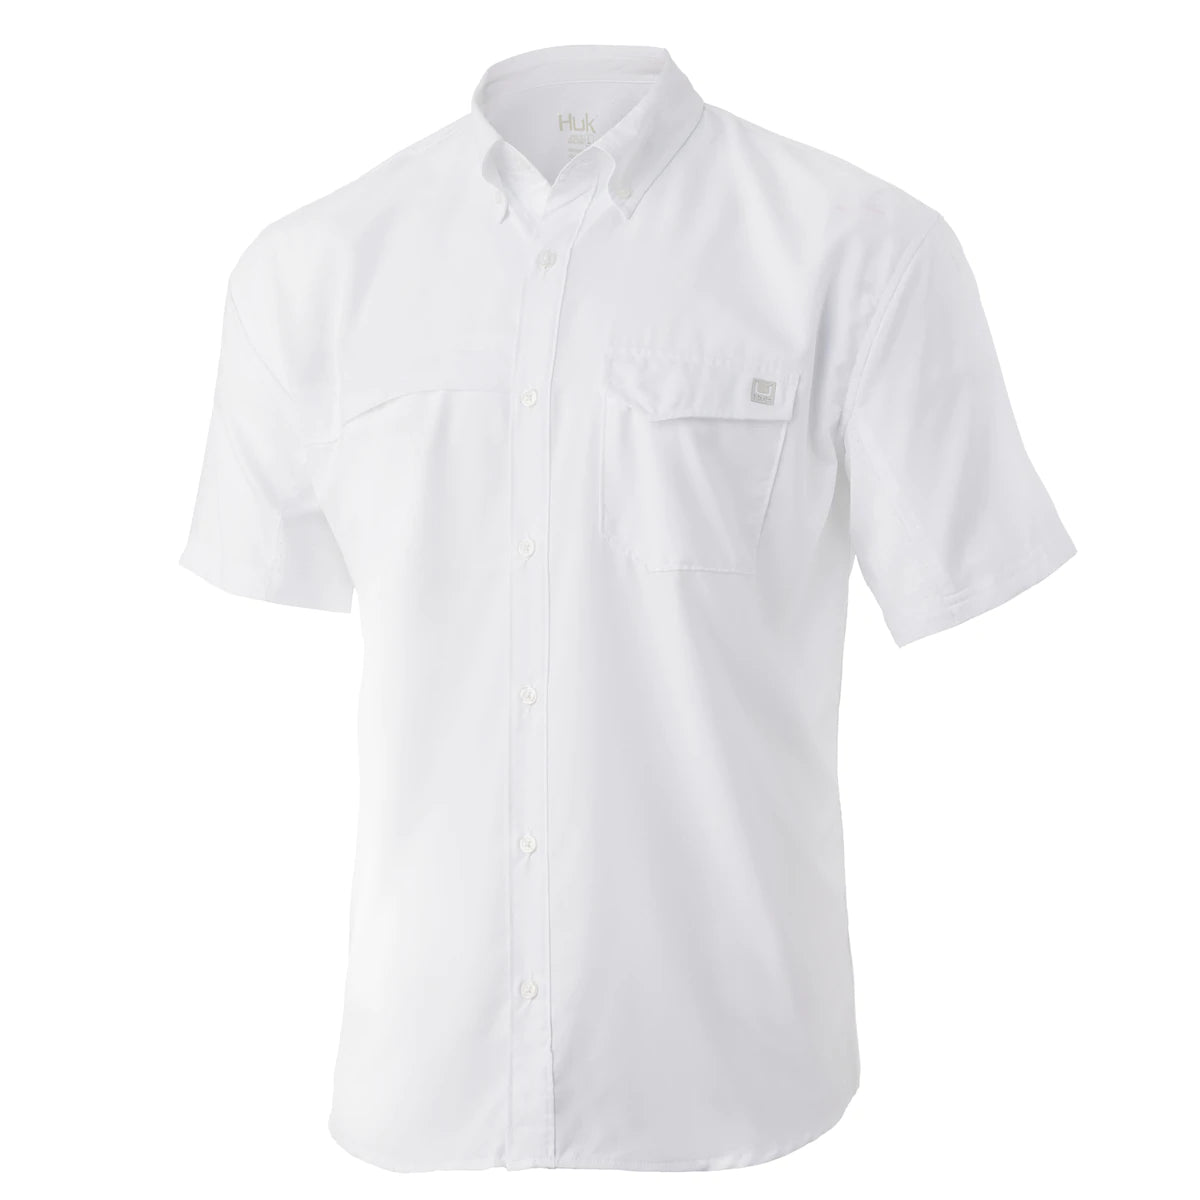 HUK FISHING Men's Sport Shirt WHITE / S Huk Tide Point Solid Short Sleeve - White || David's Clothing H1500117100